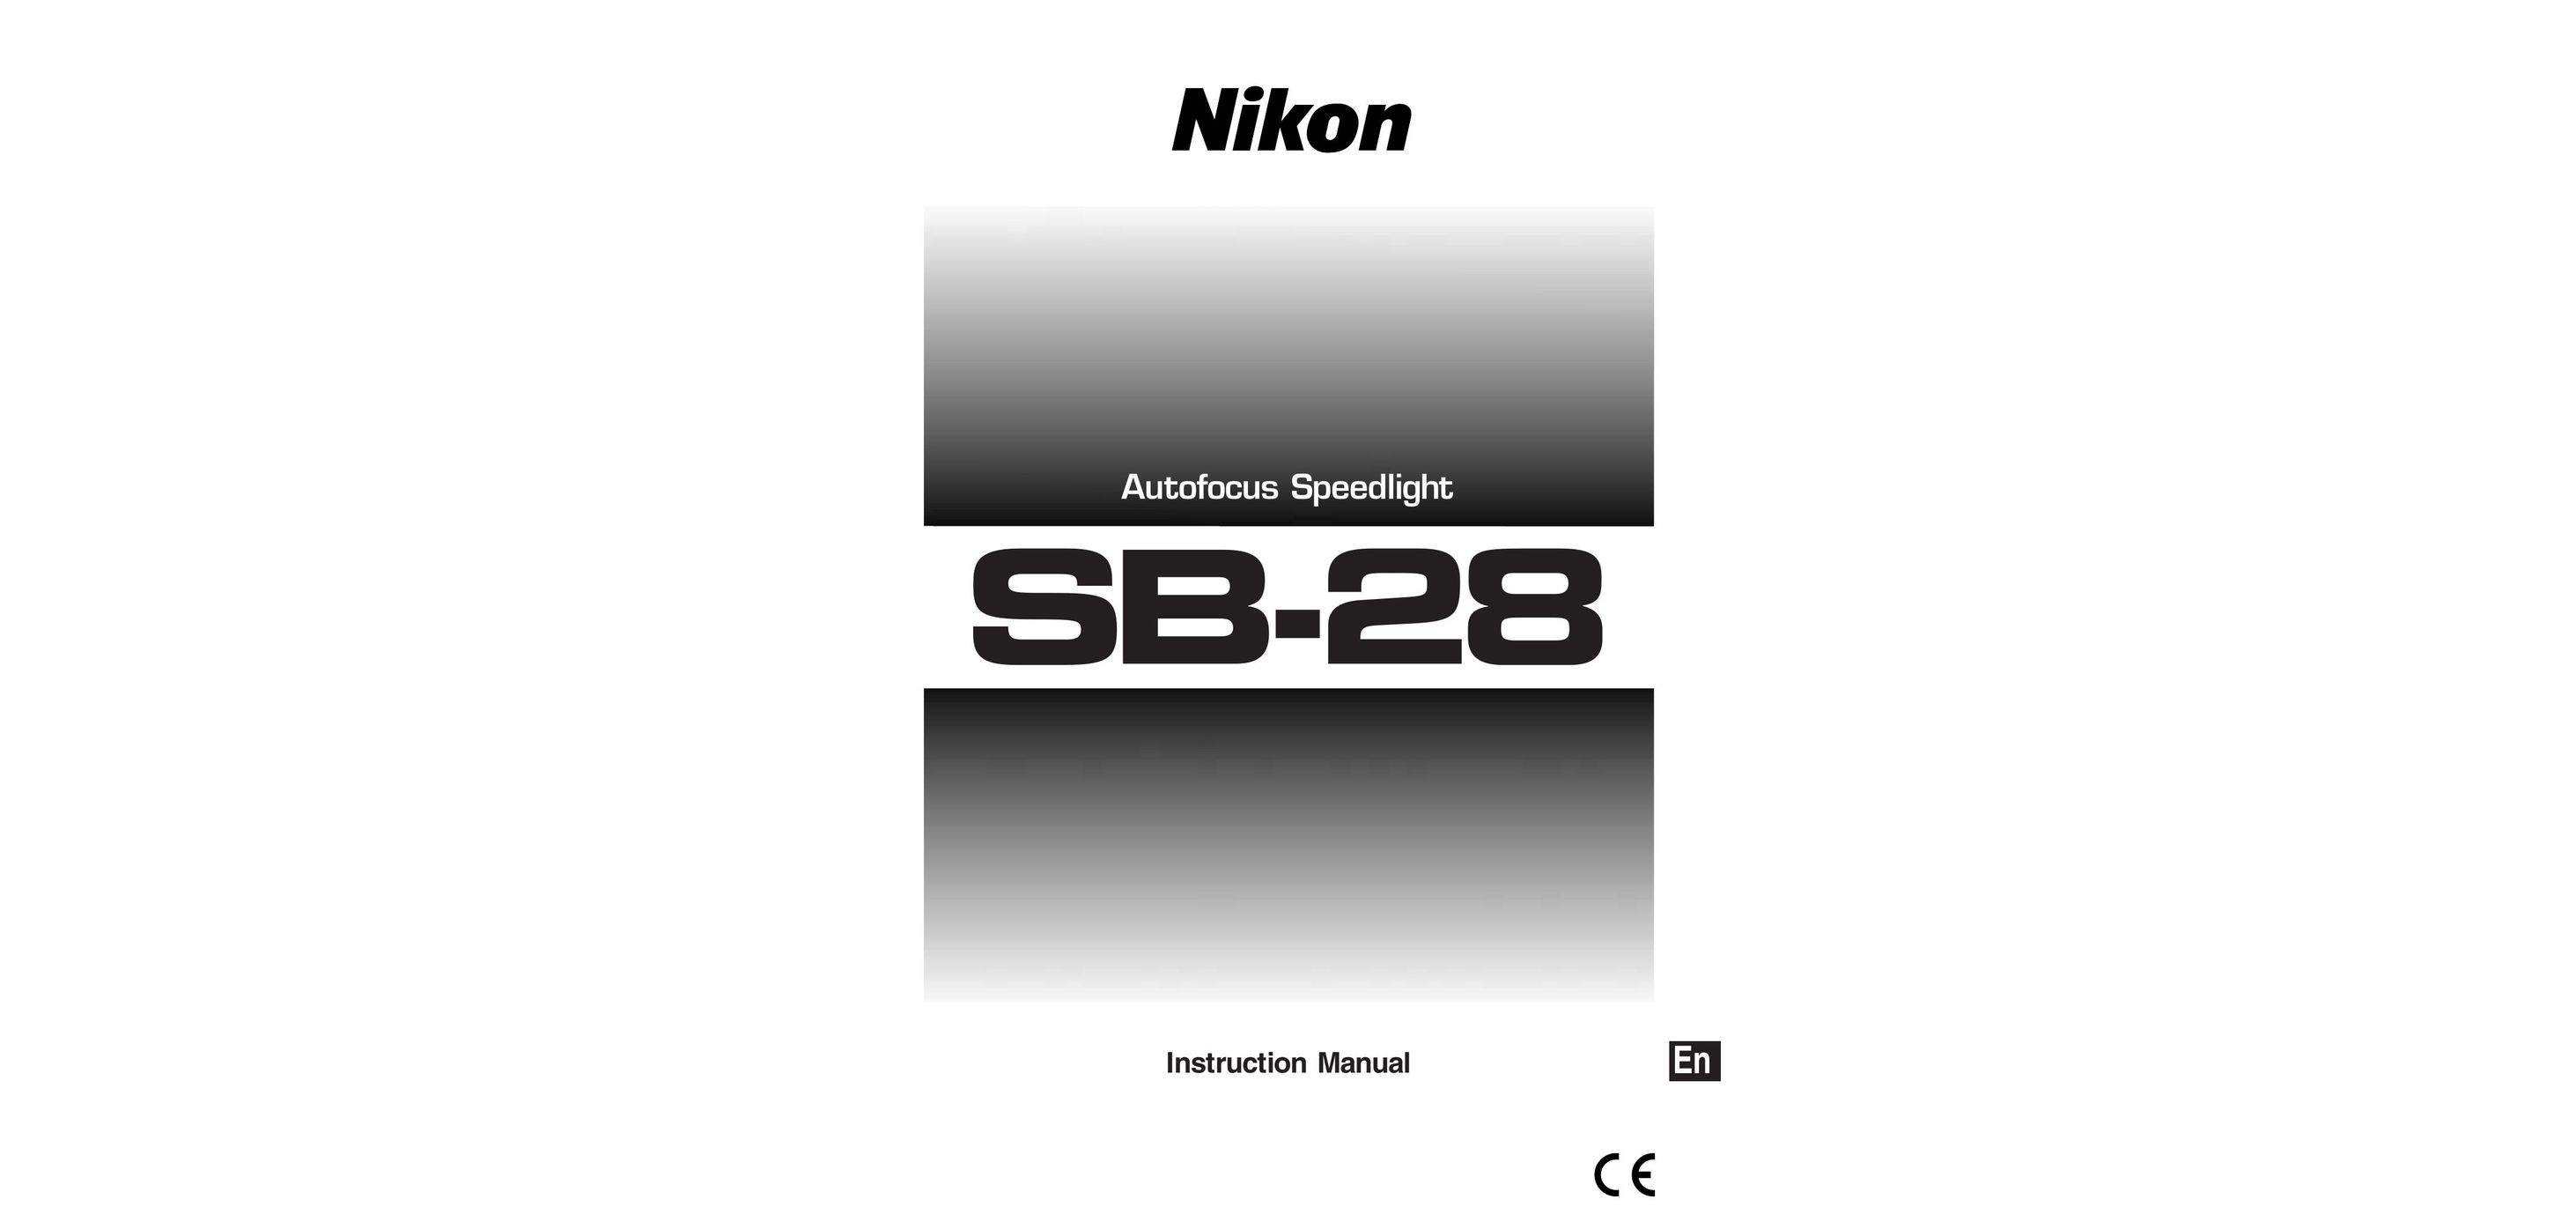 Nikon SB-28 Home Safety Product User Manual